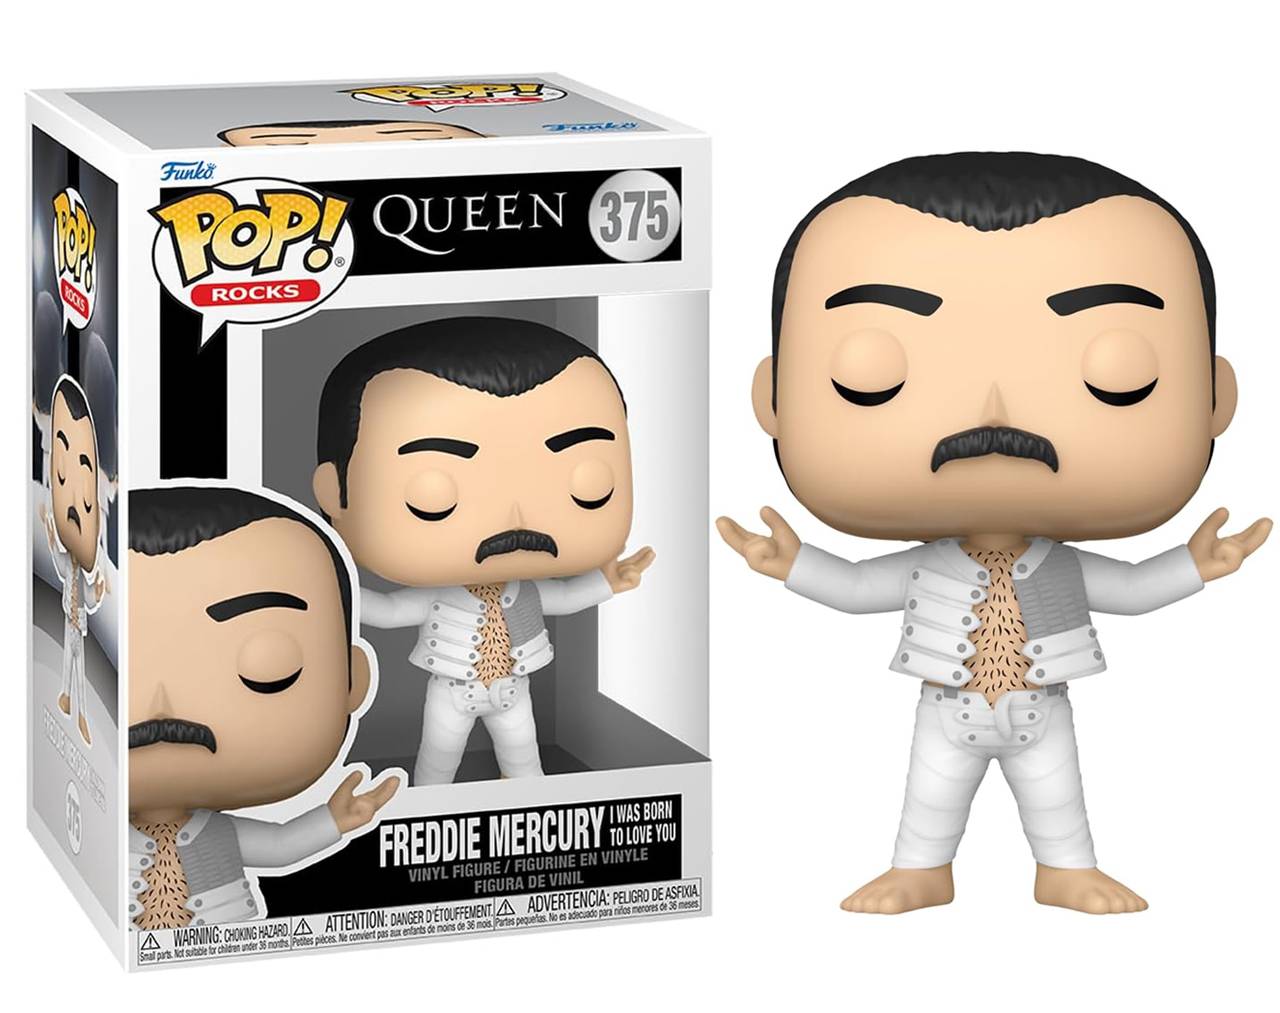 Freddie Mercury (I Was Born to Love You) - Queen Pop! Vinyl